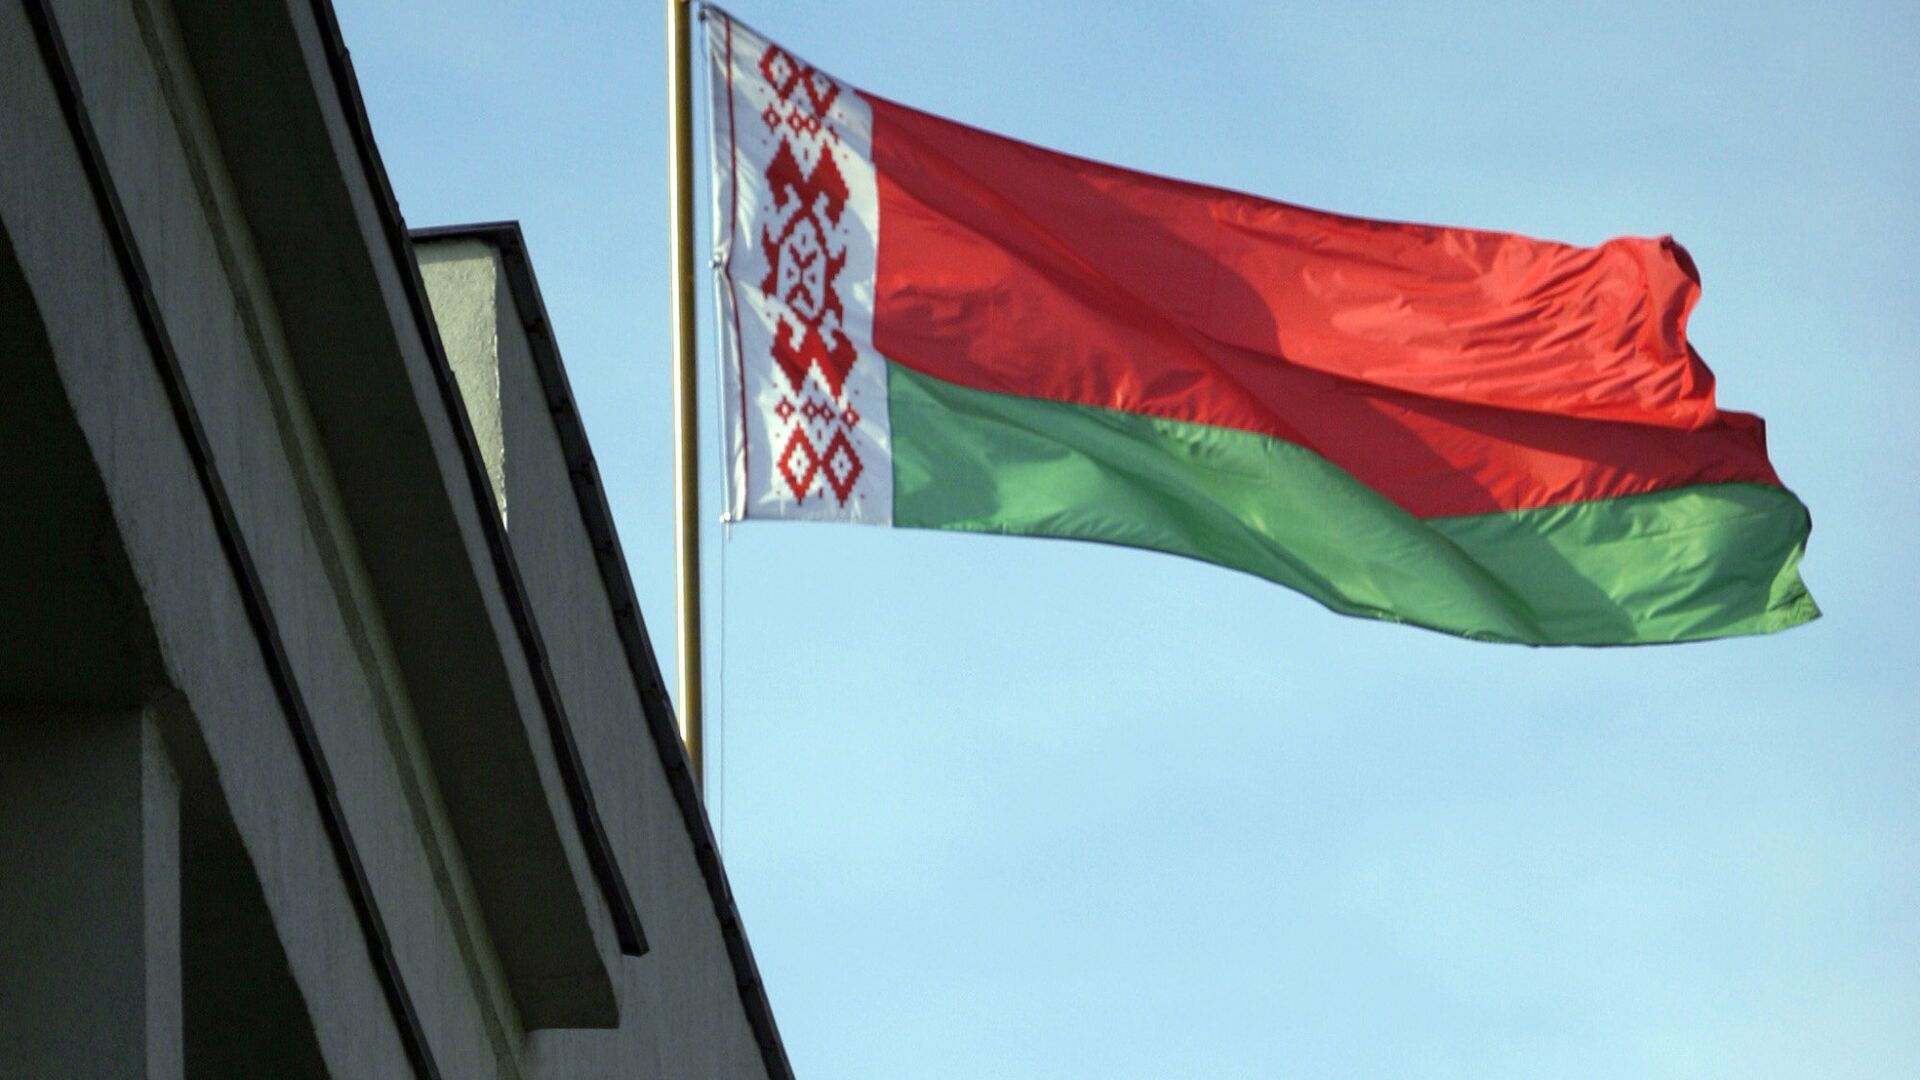 Bandera de Bielorrusia - Sputnik Mundo, 1920, 09.08.2021